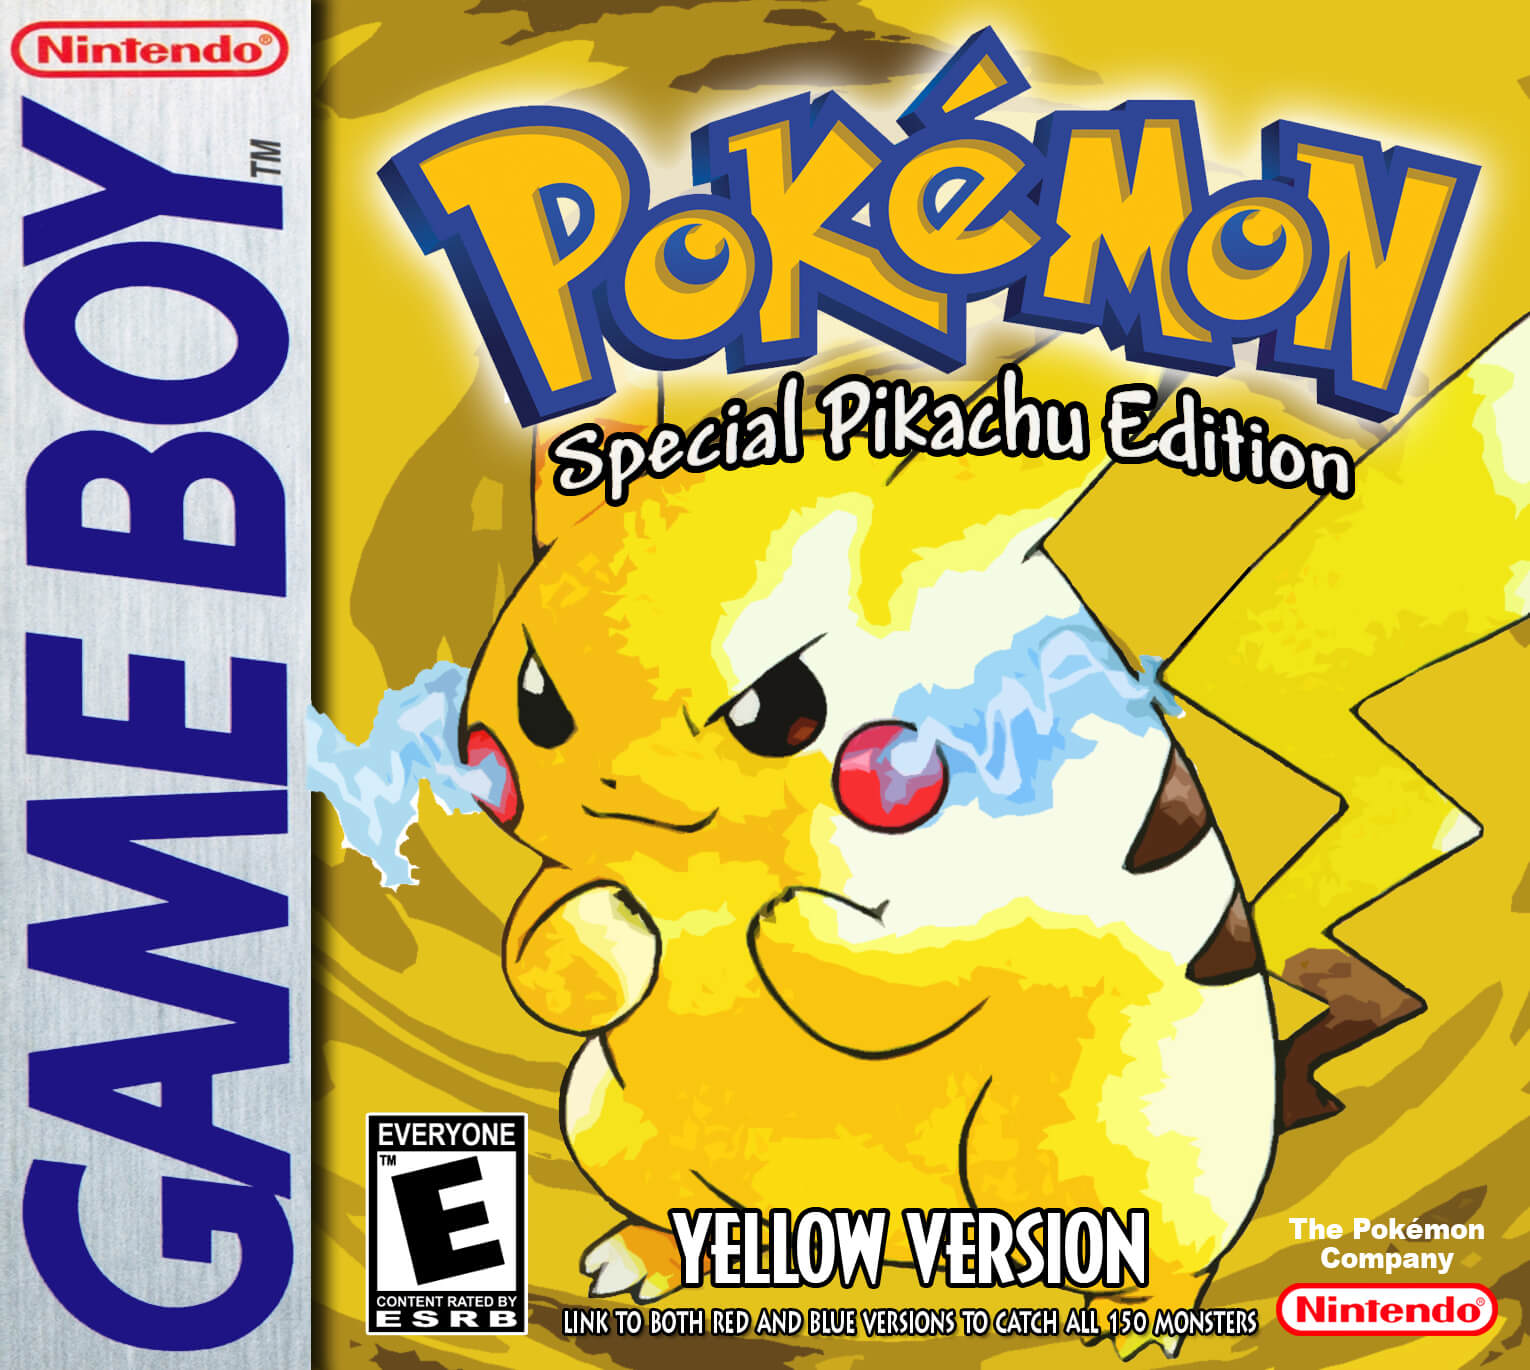 Pokémon Yellow Version Special Pikachu Edition